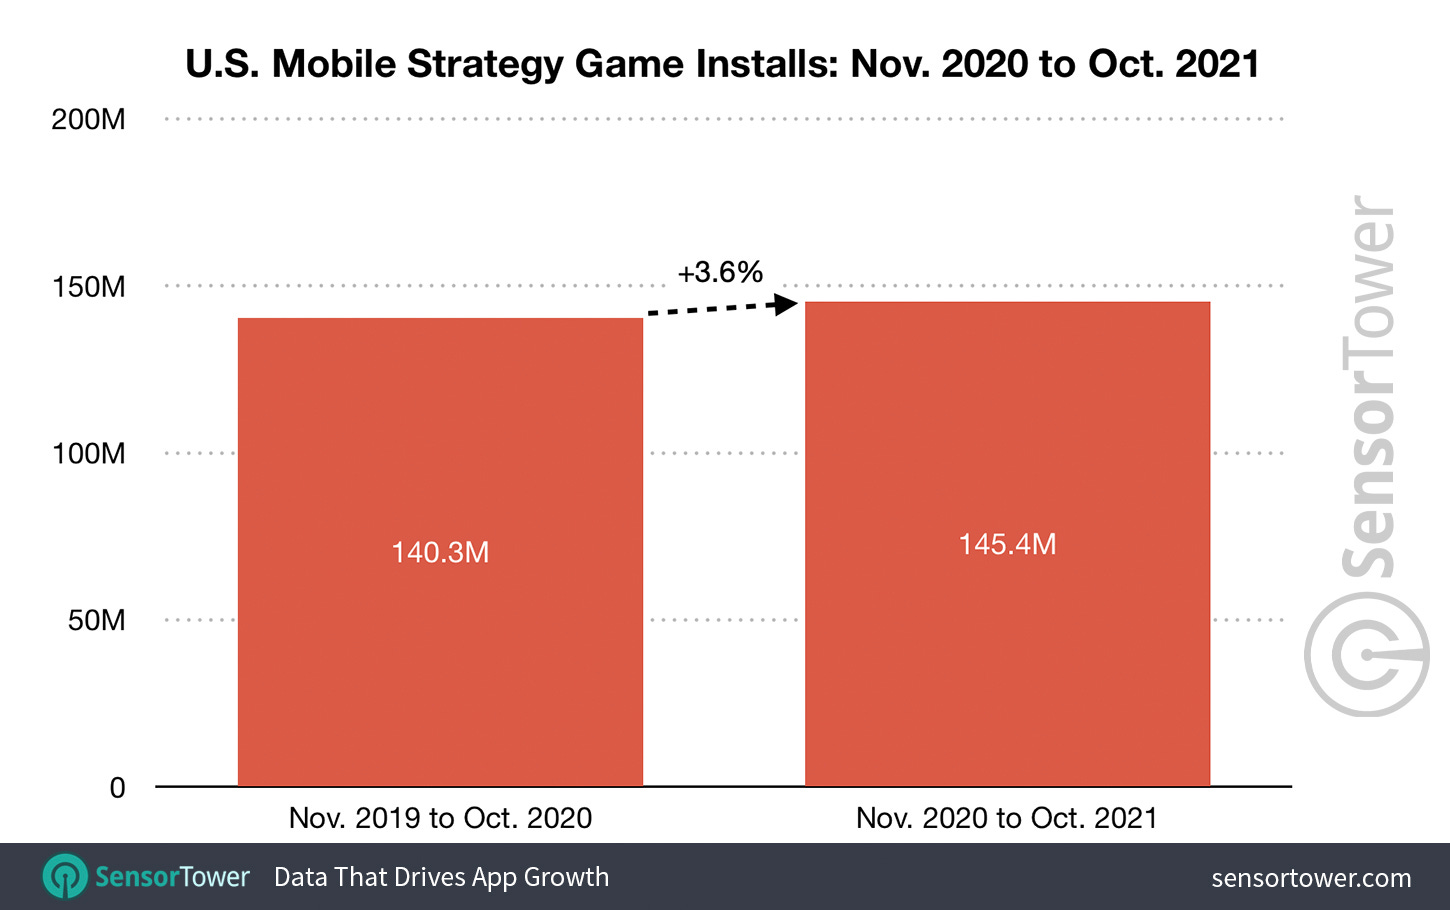 U.S. Mobile Strategy Game Installs: November 2020 to October 2021